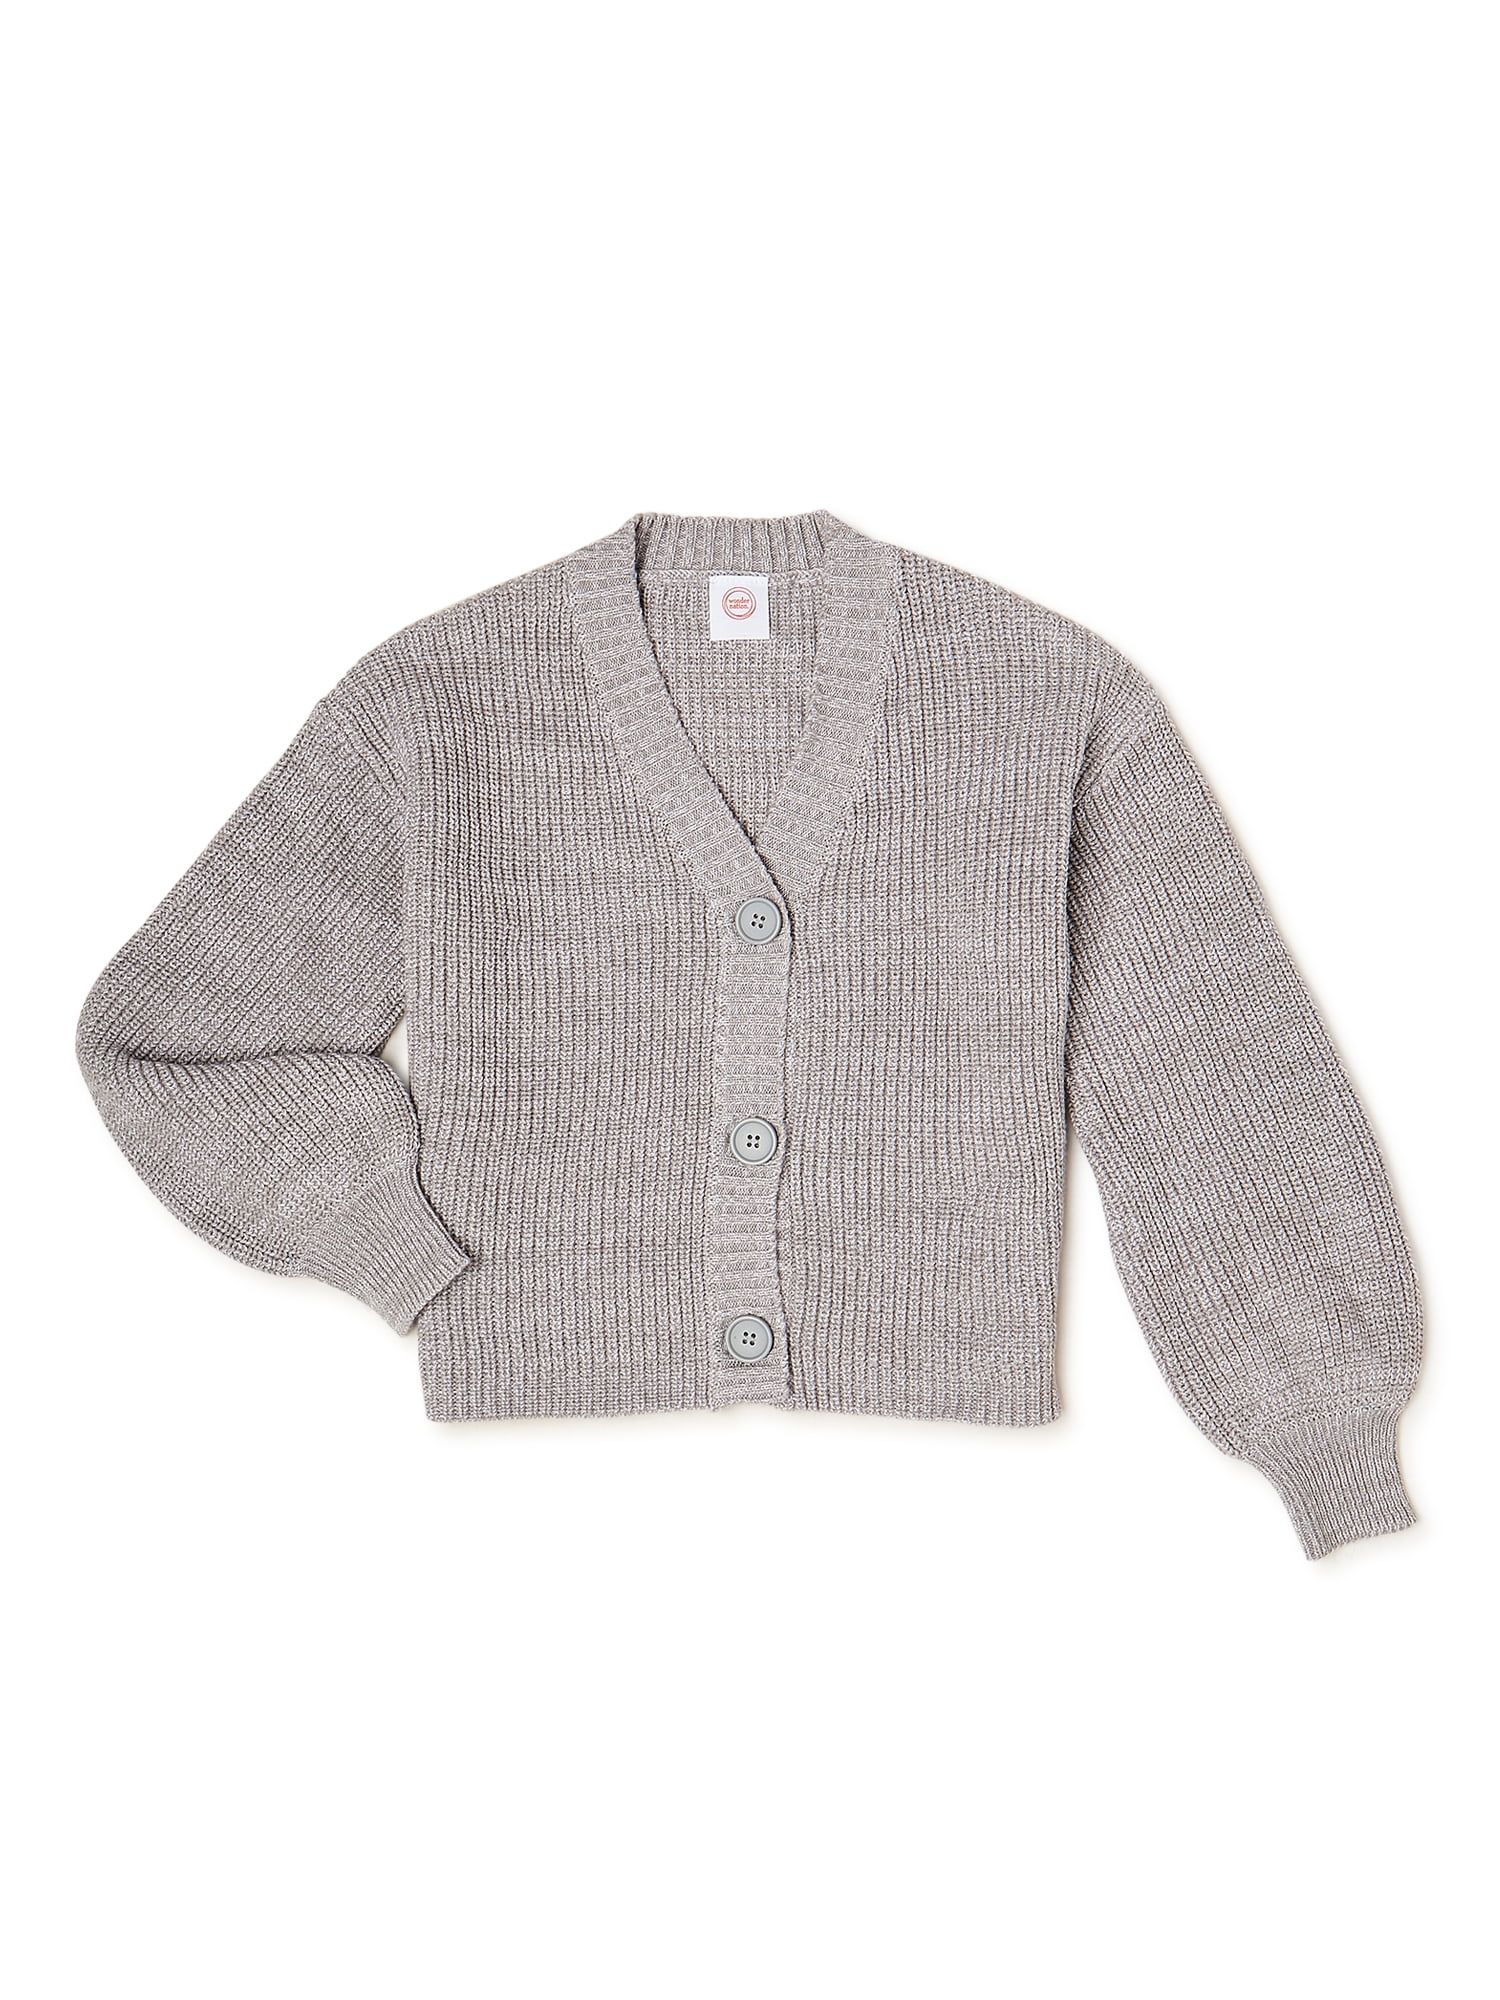 Wonder Nation Girls Long Sleeve Button-Front Cardigan Sweater, Sizes 4-18 & Plus | Walmart (US)